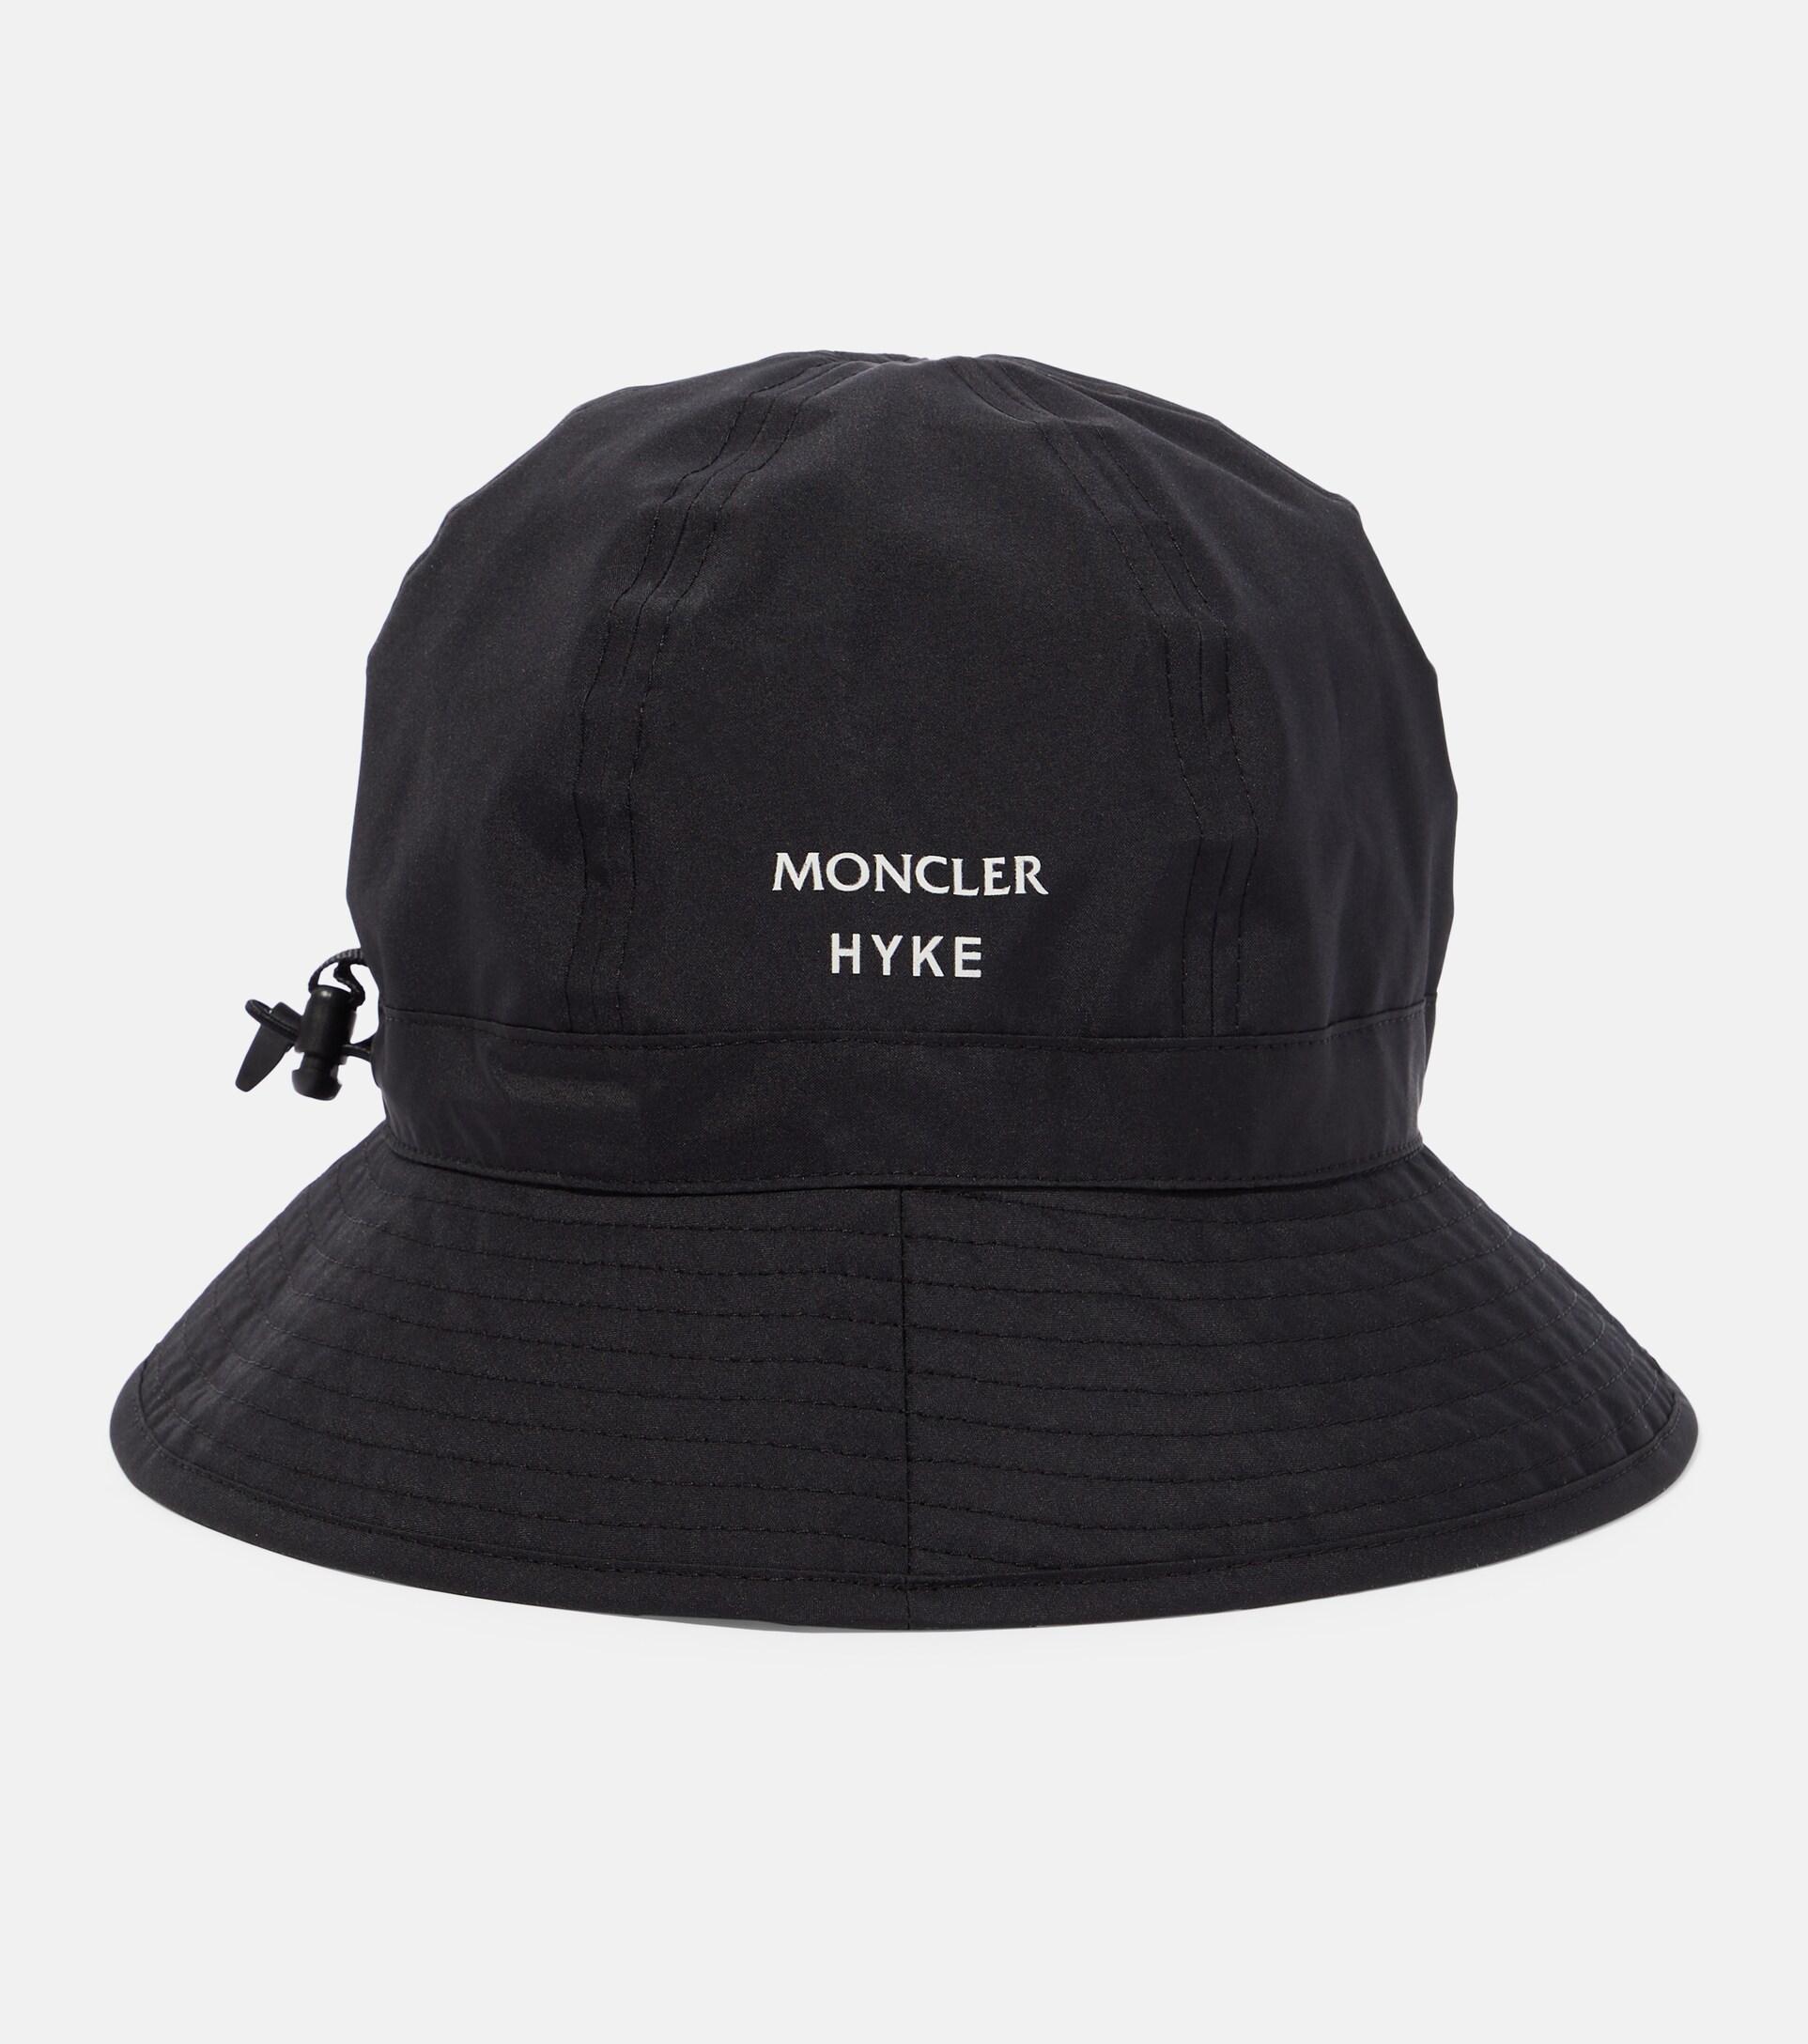 Moncler Genius 4 Moncler Hyke Adjustable Bucket Hat in Black | Lyst